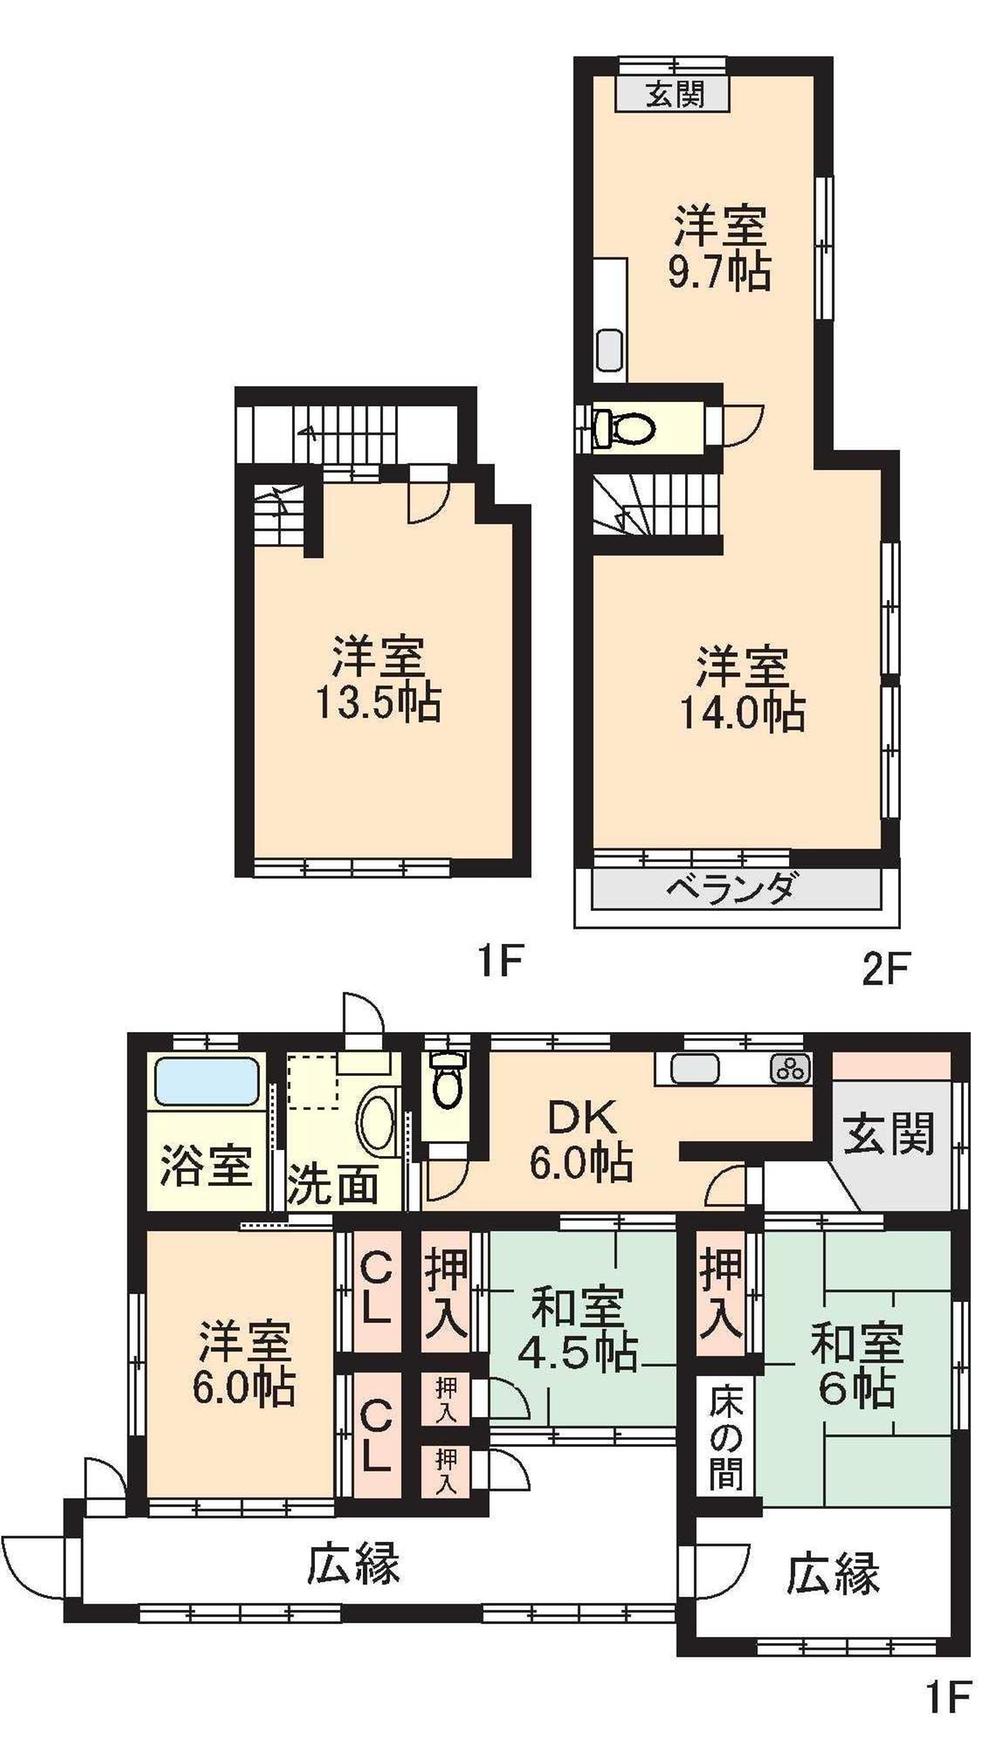 Floor plan. 12.8 million yen, 6DK + S (storeroom), Land area 363.63 sq m , Building area 78.71 sq m